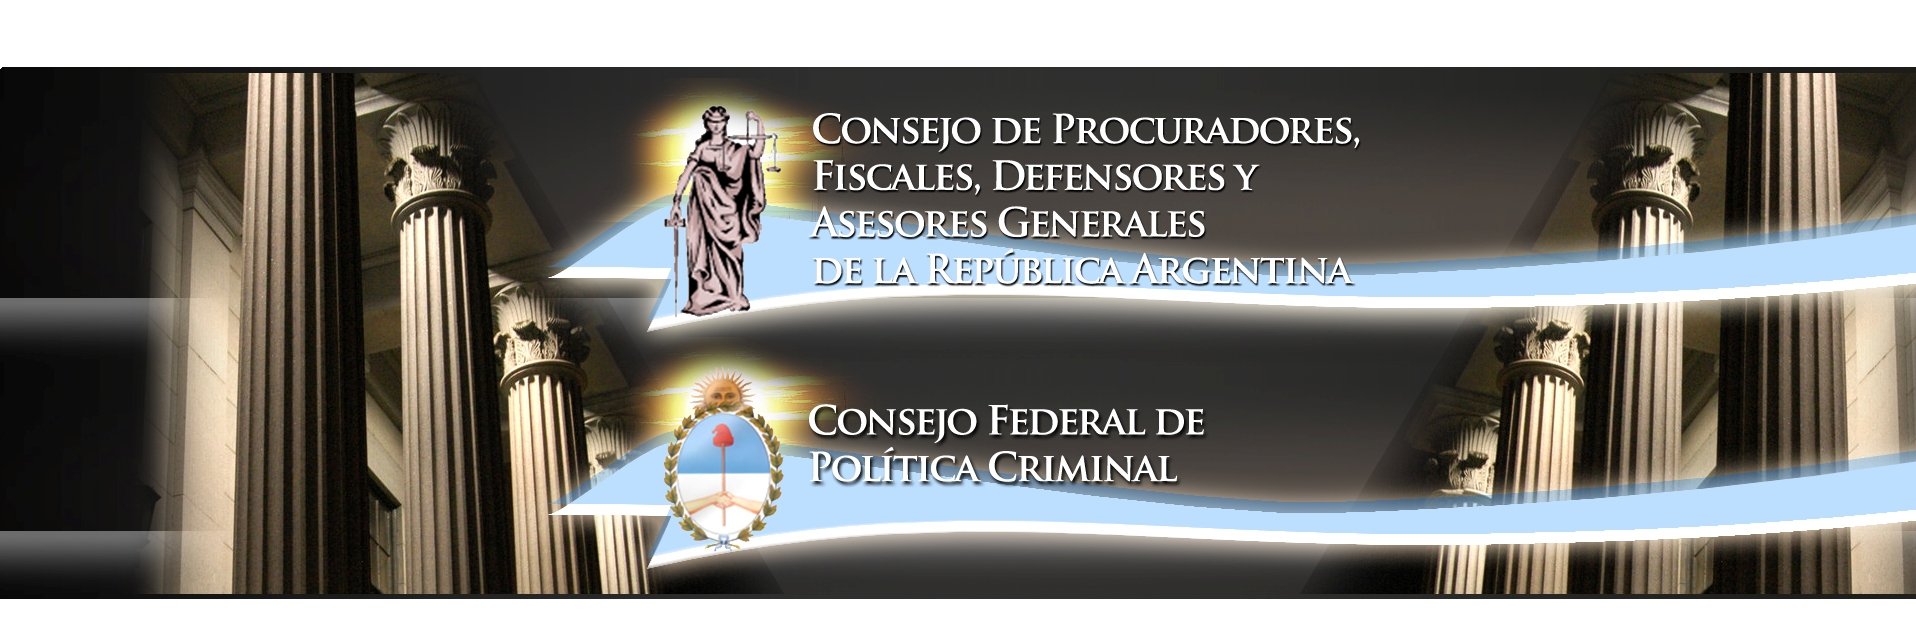 Consejo_de_Procuradores